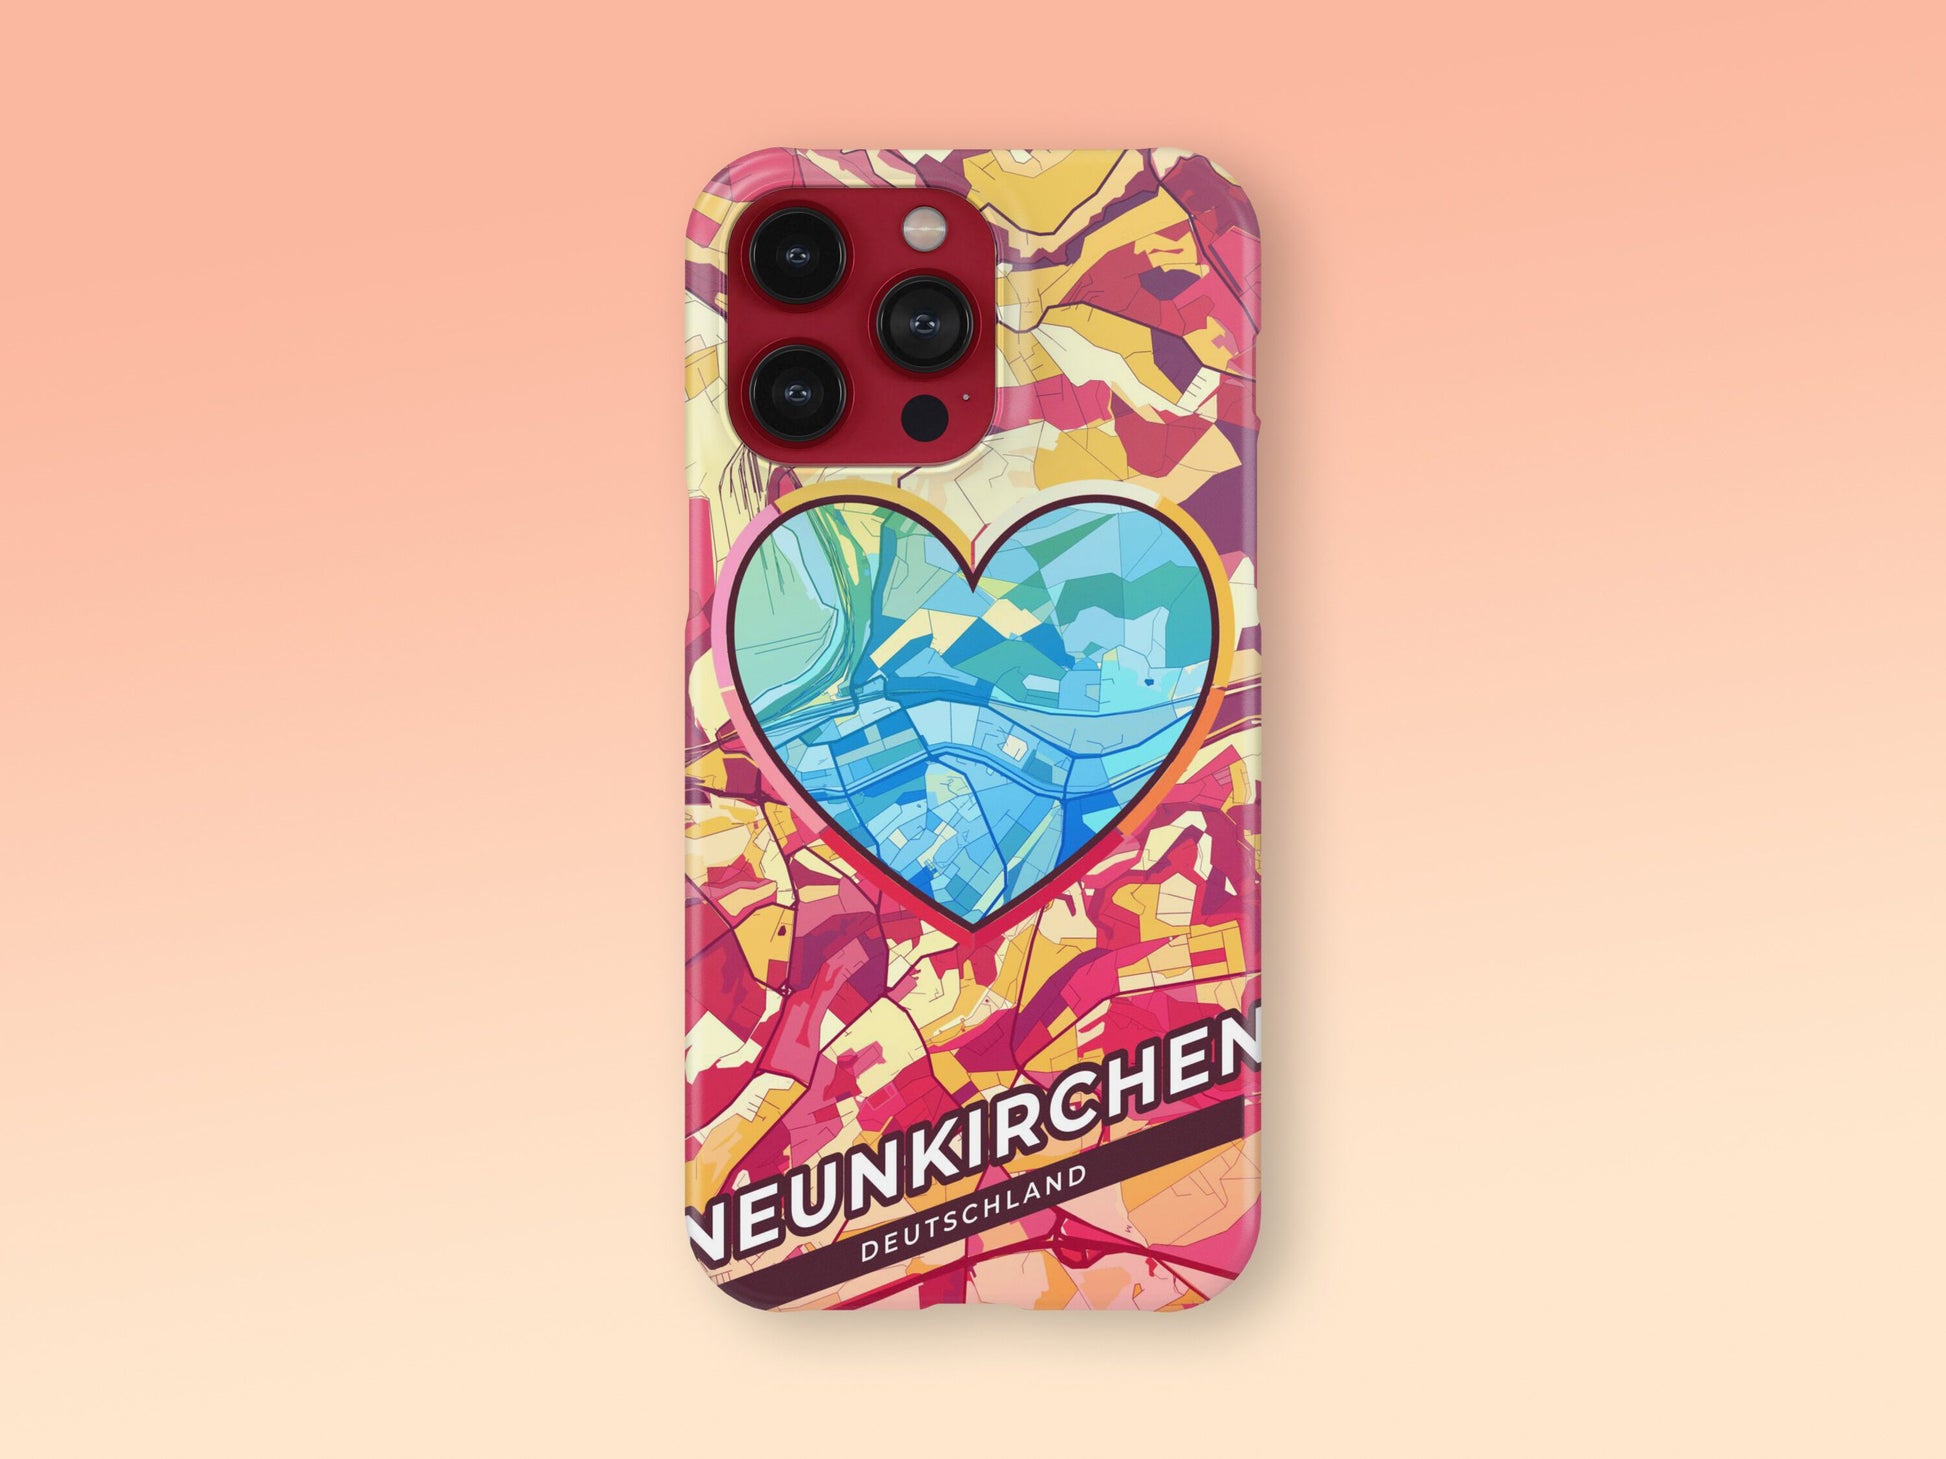 Neunkirchen Deutschland slim phone case with colorful icon. Birthday, wedding or housewarming gift. Couple match cases. 2